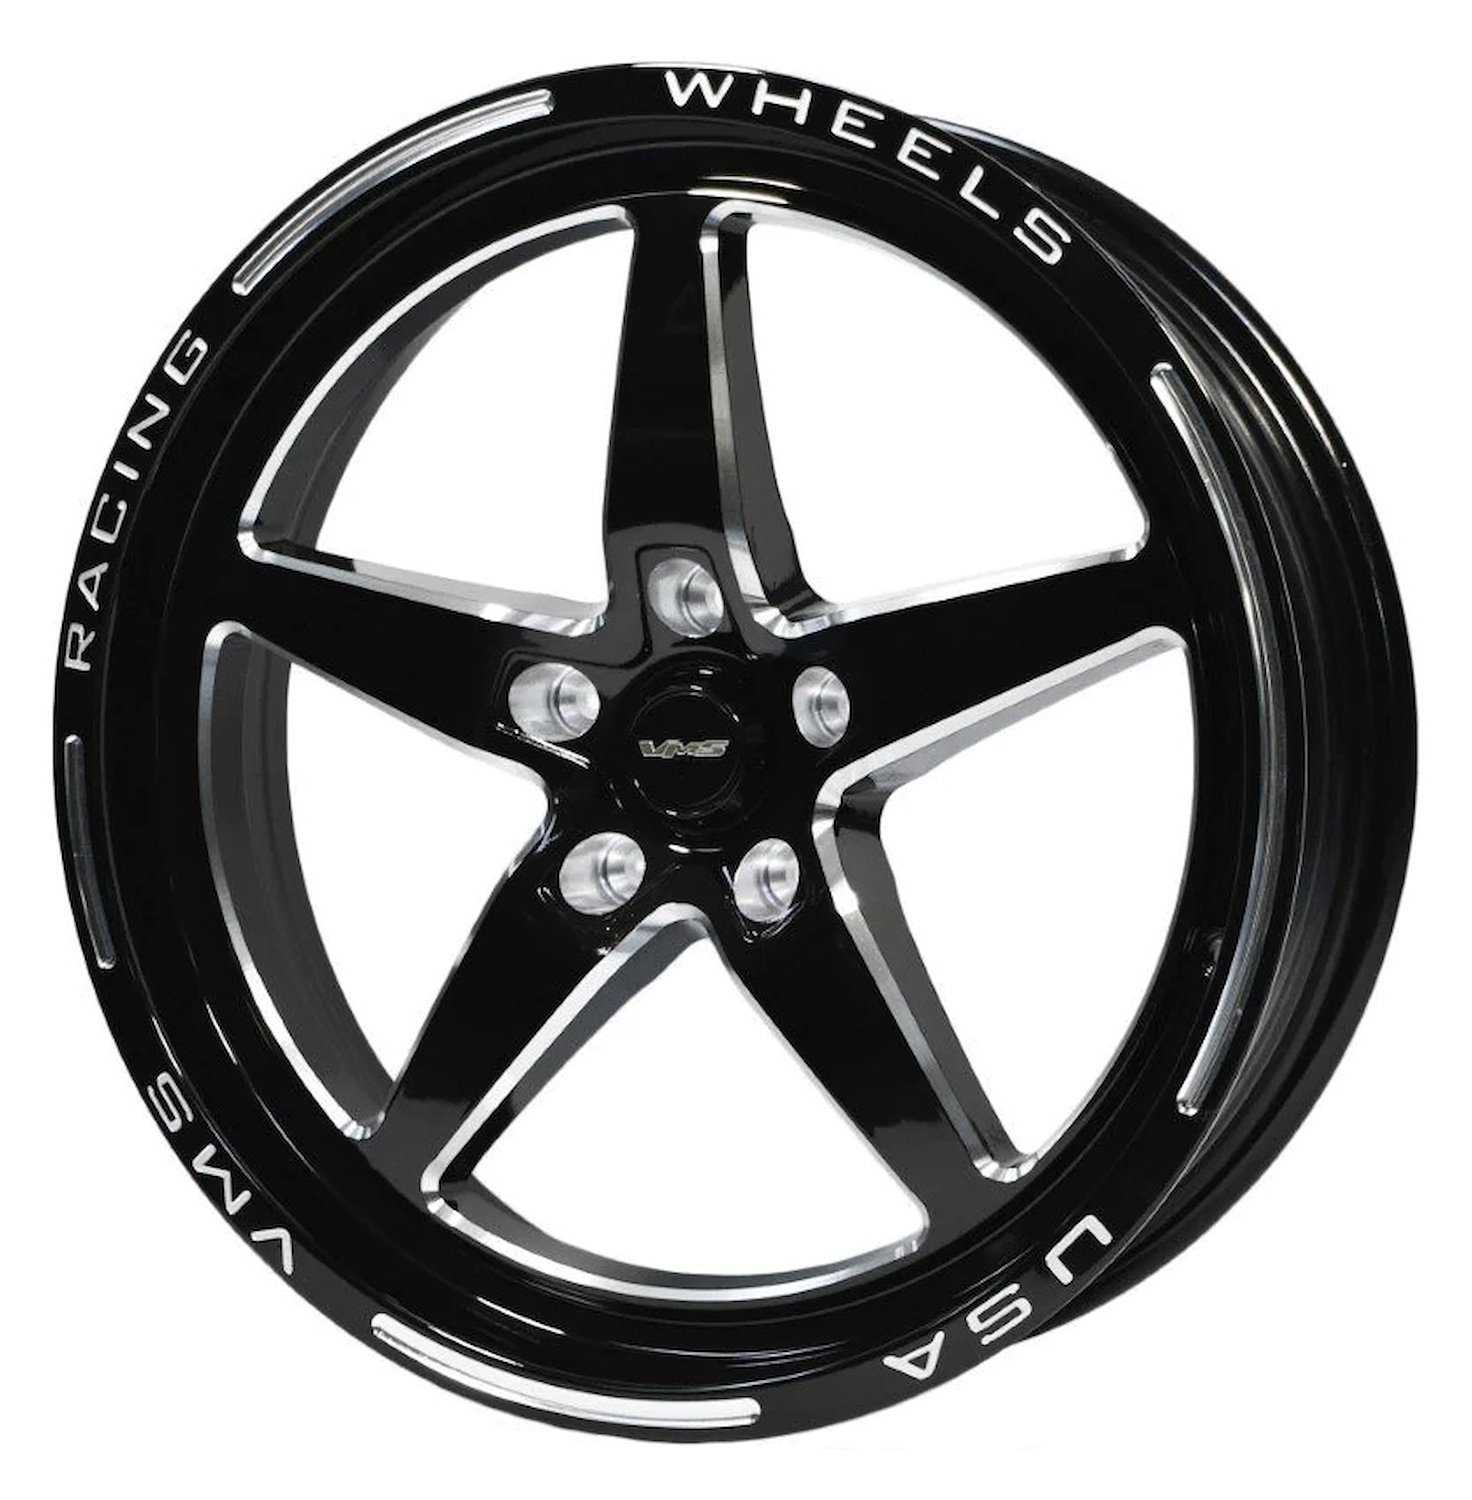 VWST014 V-Star Wheel, Size: 18" x 5", Bolt Pattern: 5 x 4 1/2" (114.3 mm) [Finish: Gloss Black Milled]